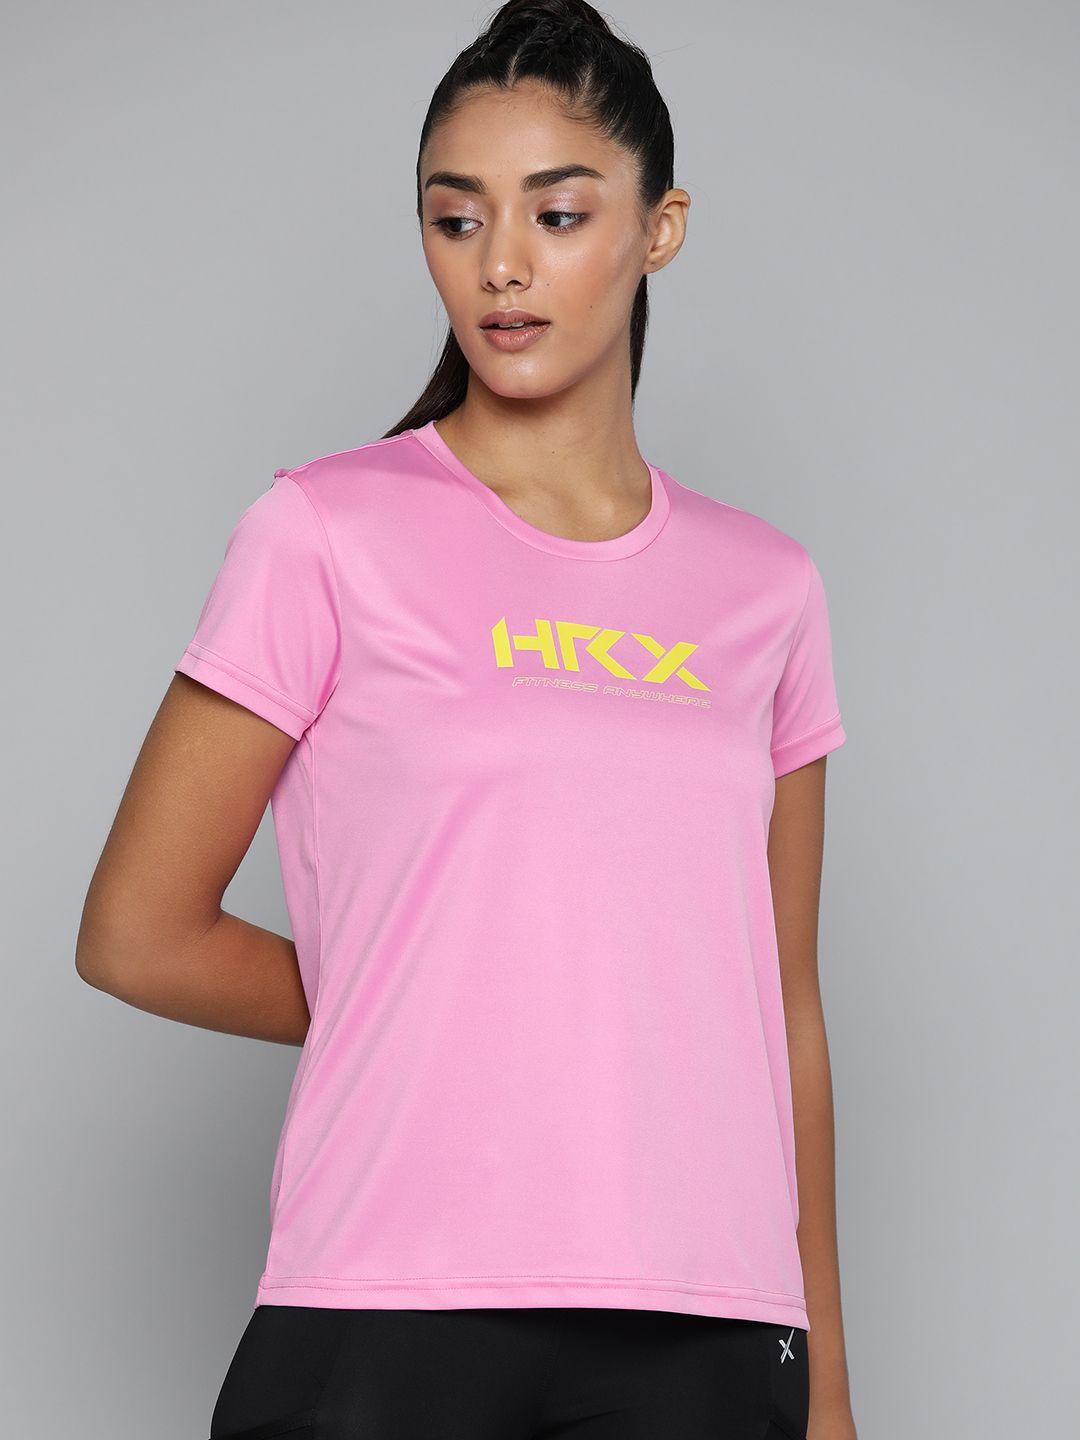 hrx by hrithik roshan training women wild rose rapid-dry brand carrier tshirts